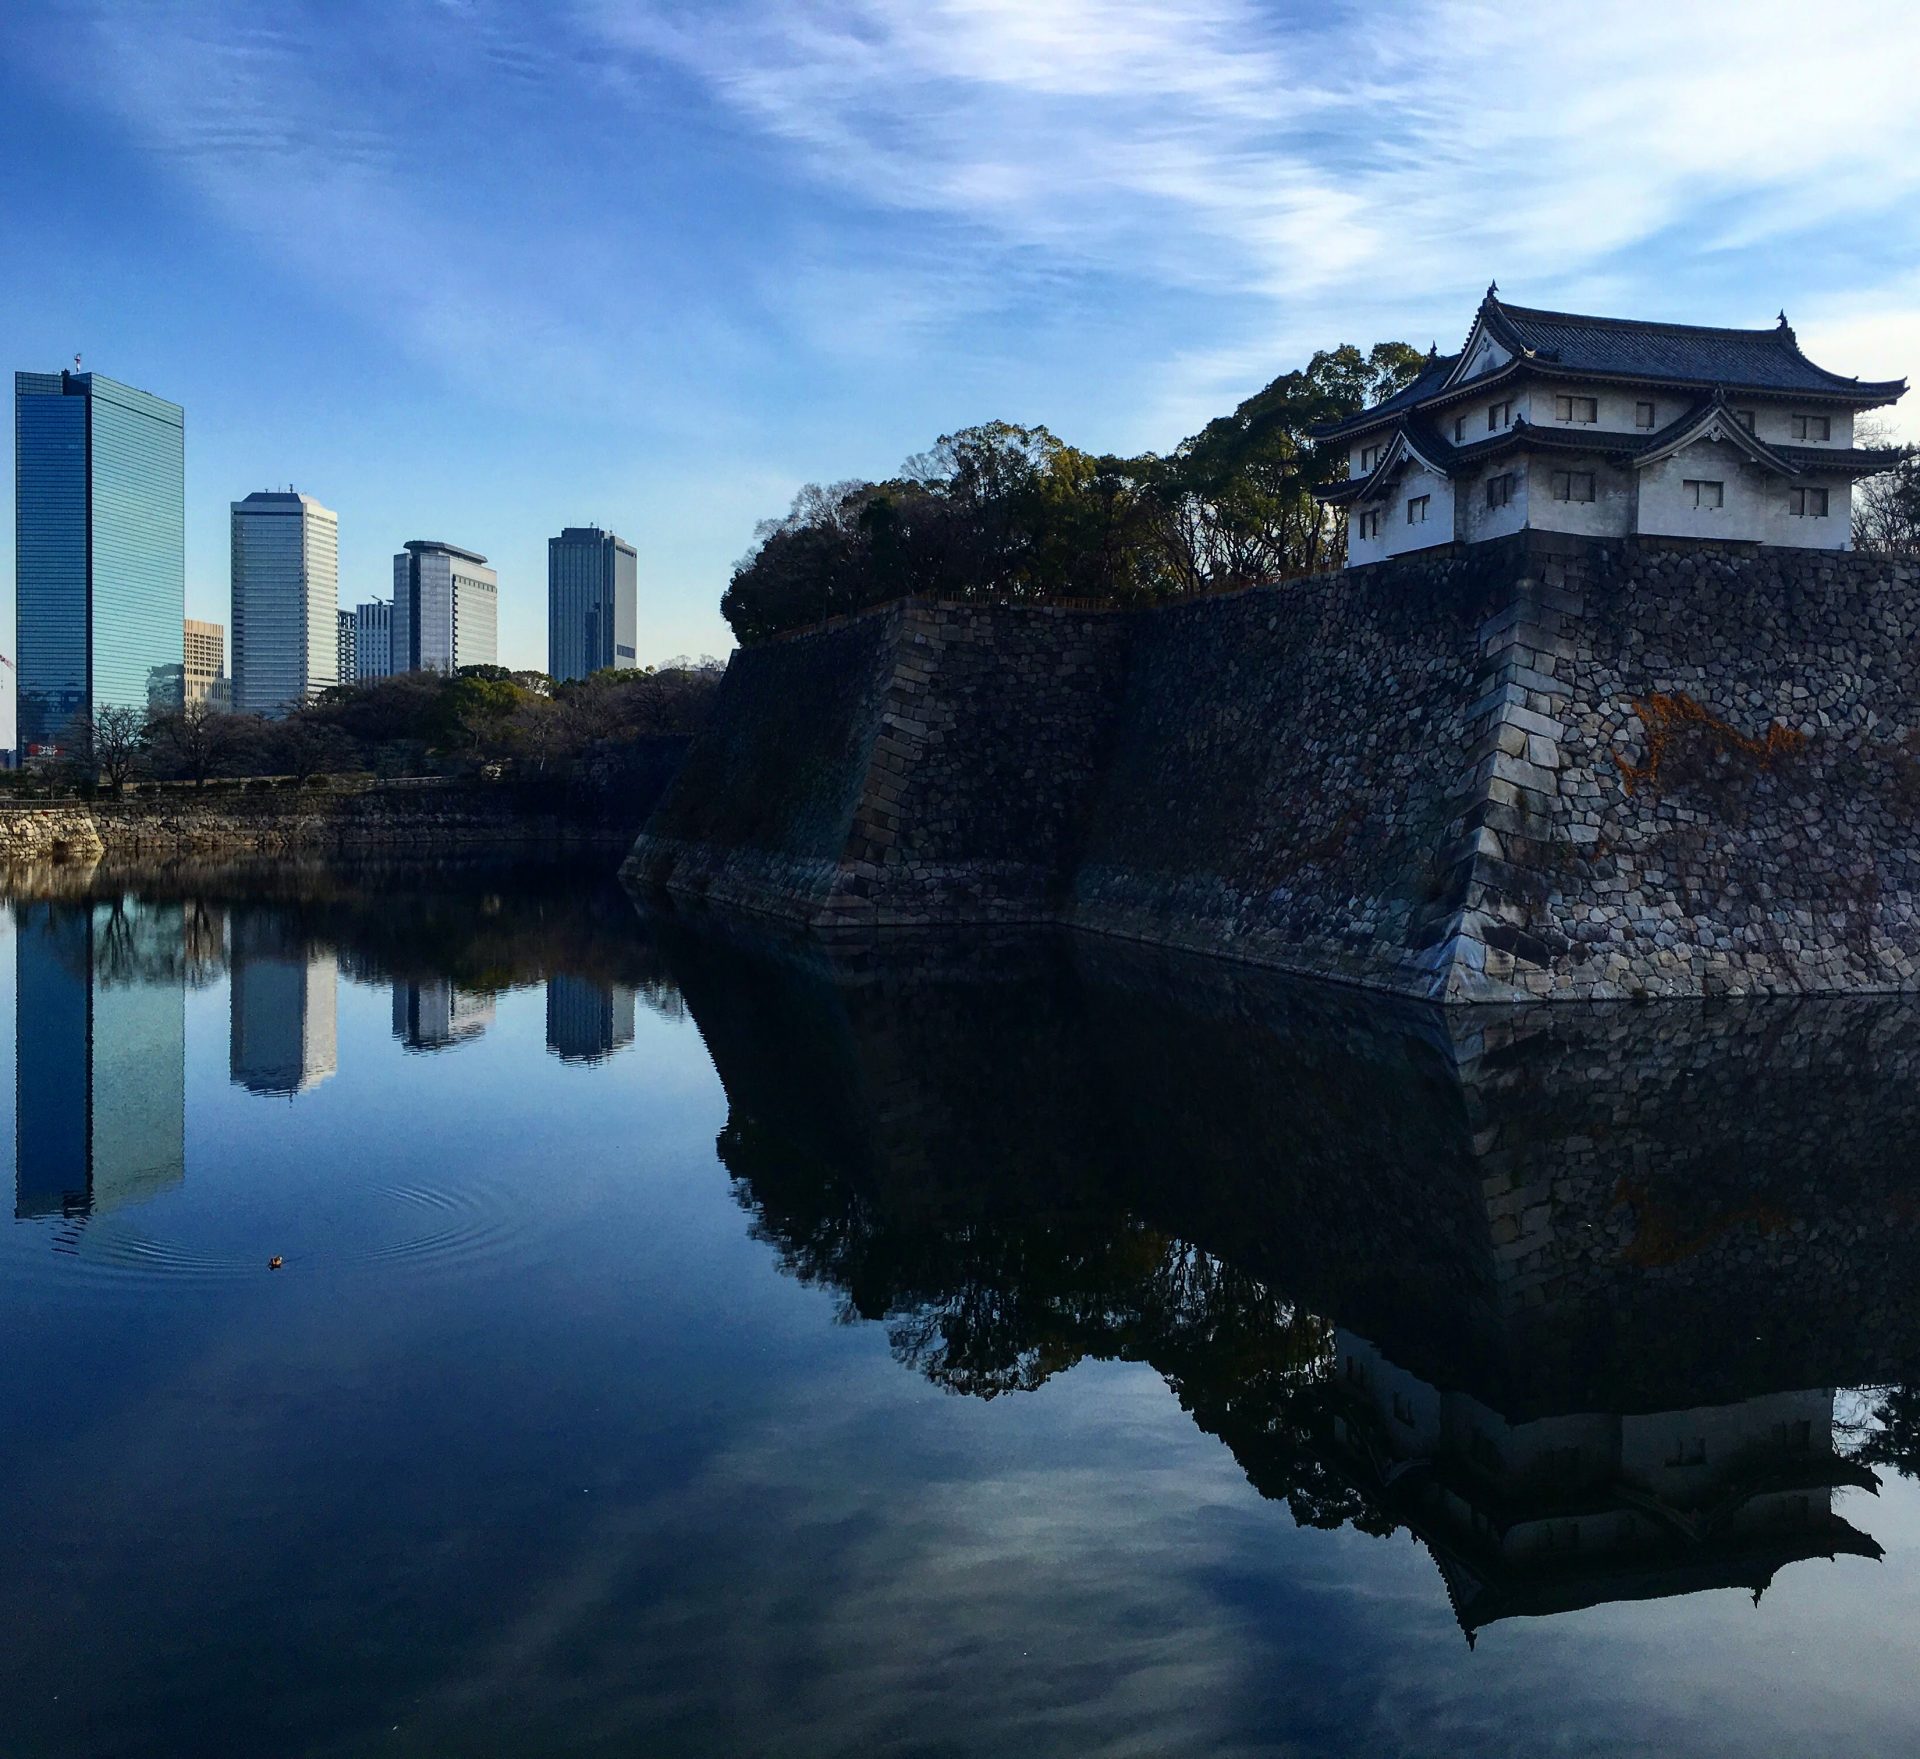 osaka castle - Layover in Osaka - Ramen, Sushi, & Exploring the City